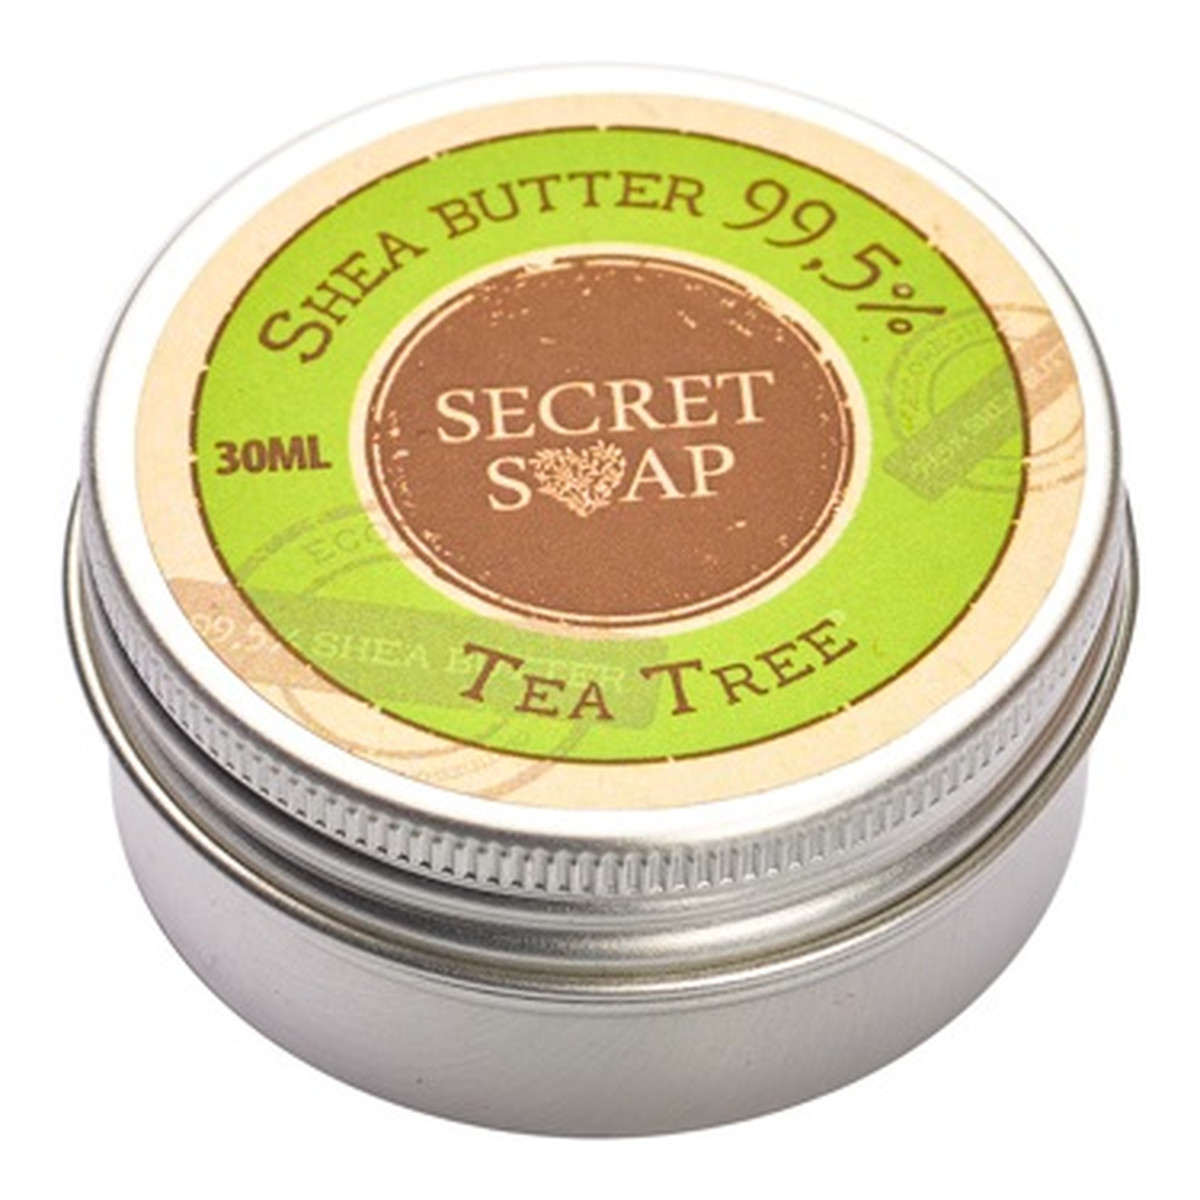 The Secret Soap Store Masło shea 99.5% drzewo herbaciane 30ml